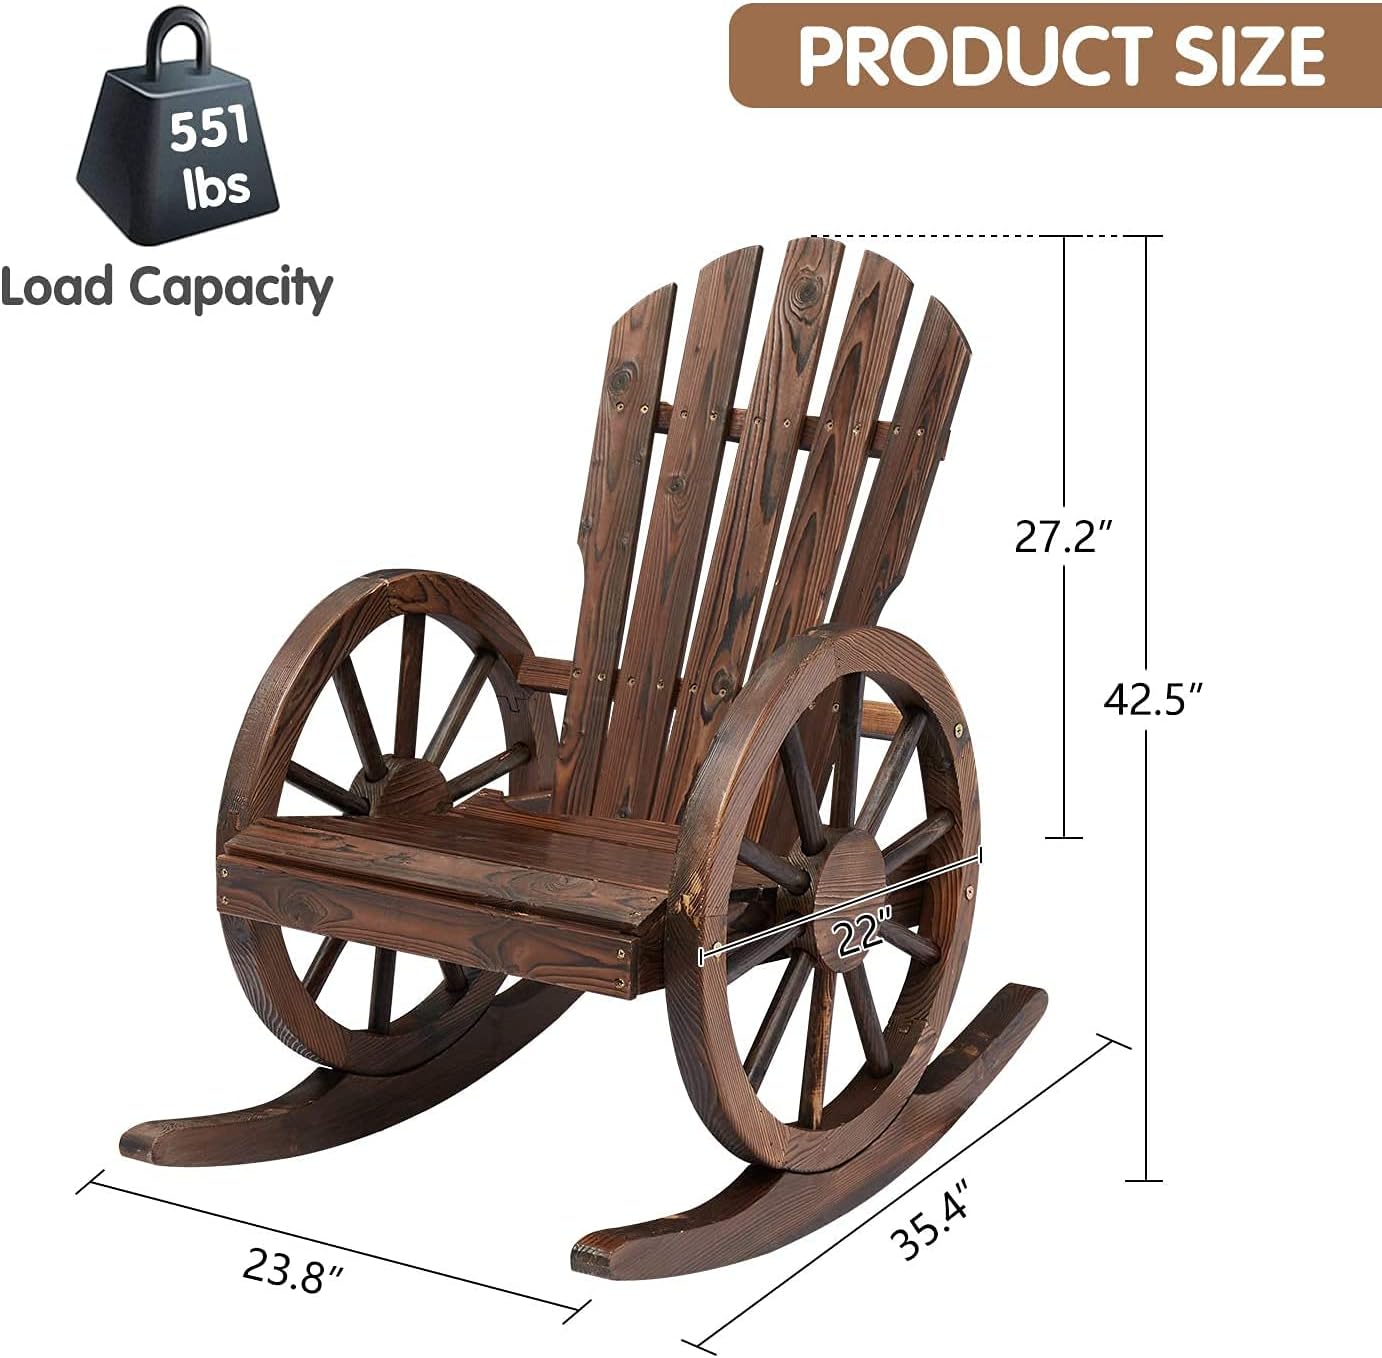 Kinbor Wagon Wheel Wood Rocking Chair Outdoor Furniture Patio Chairs Armrest Rocker - image 5 of 7